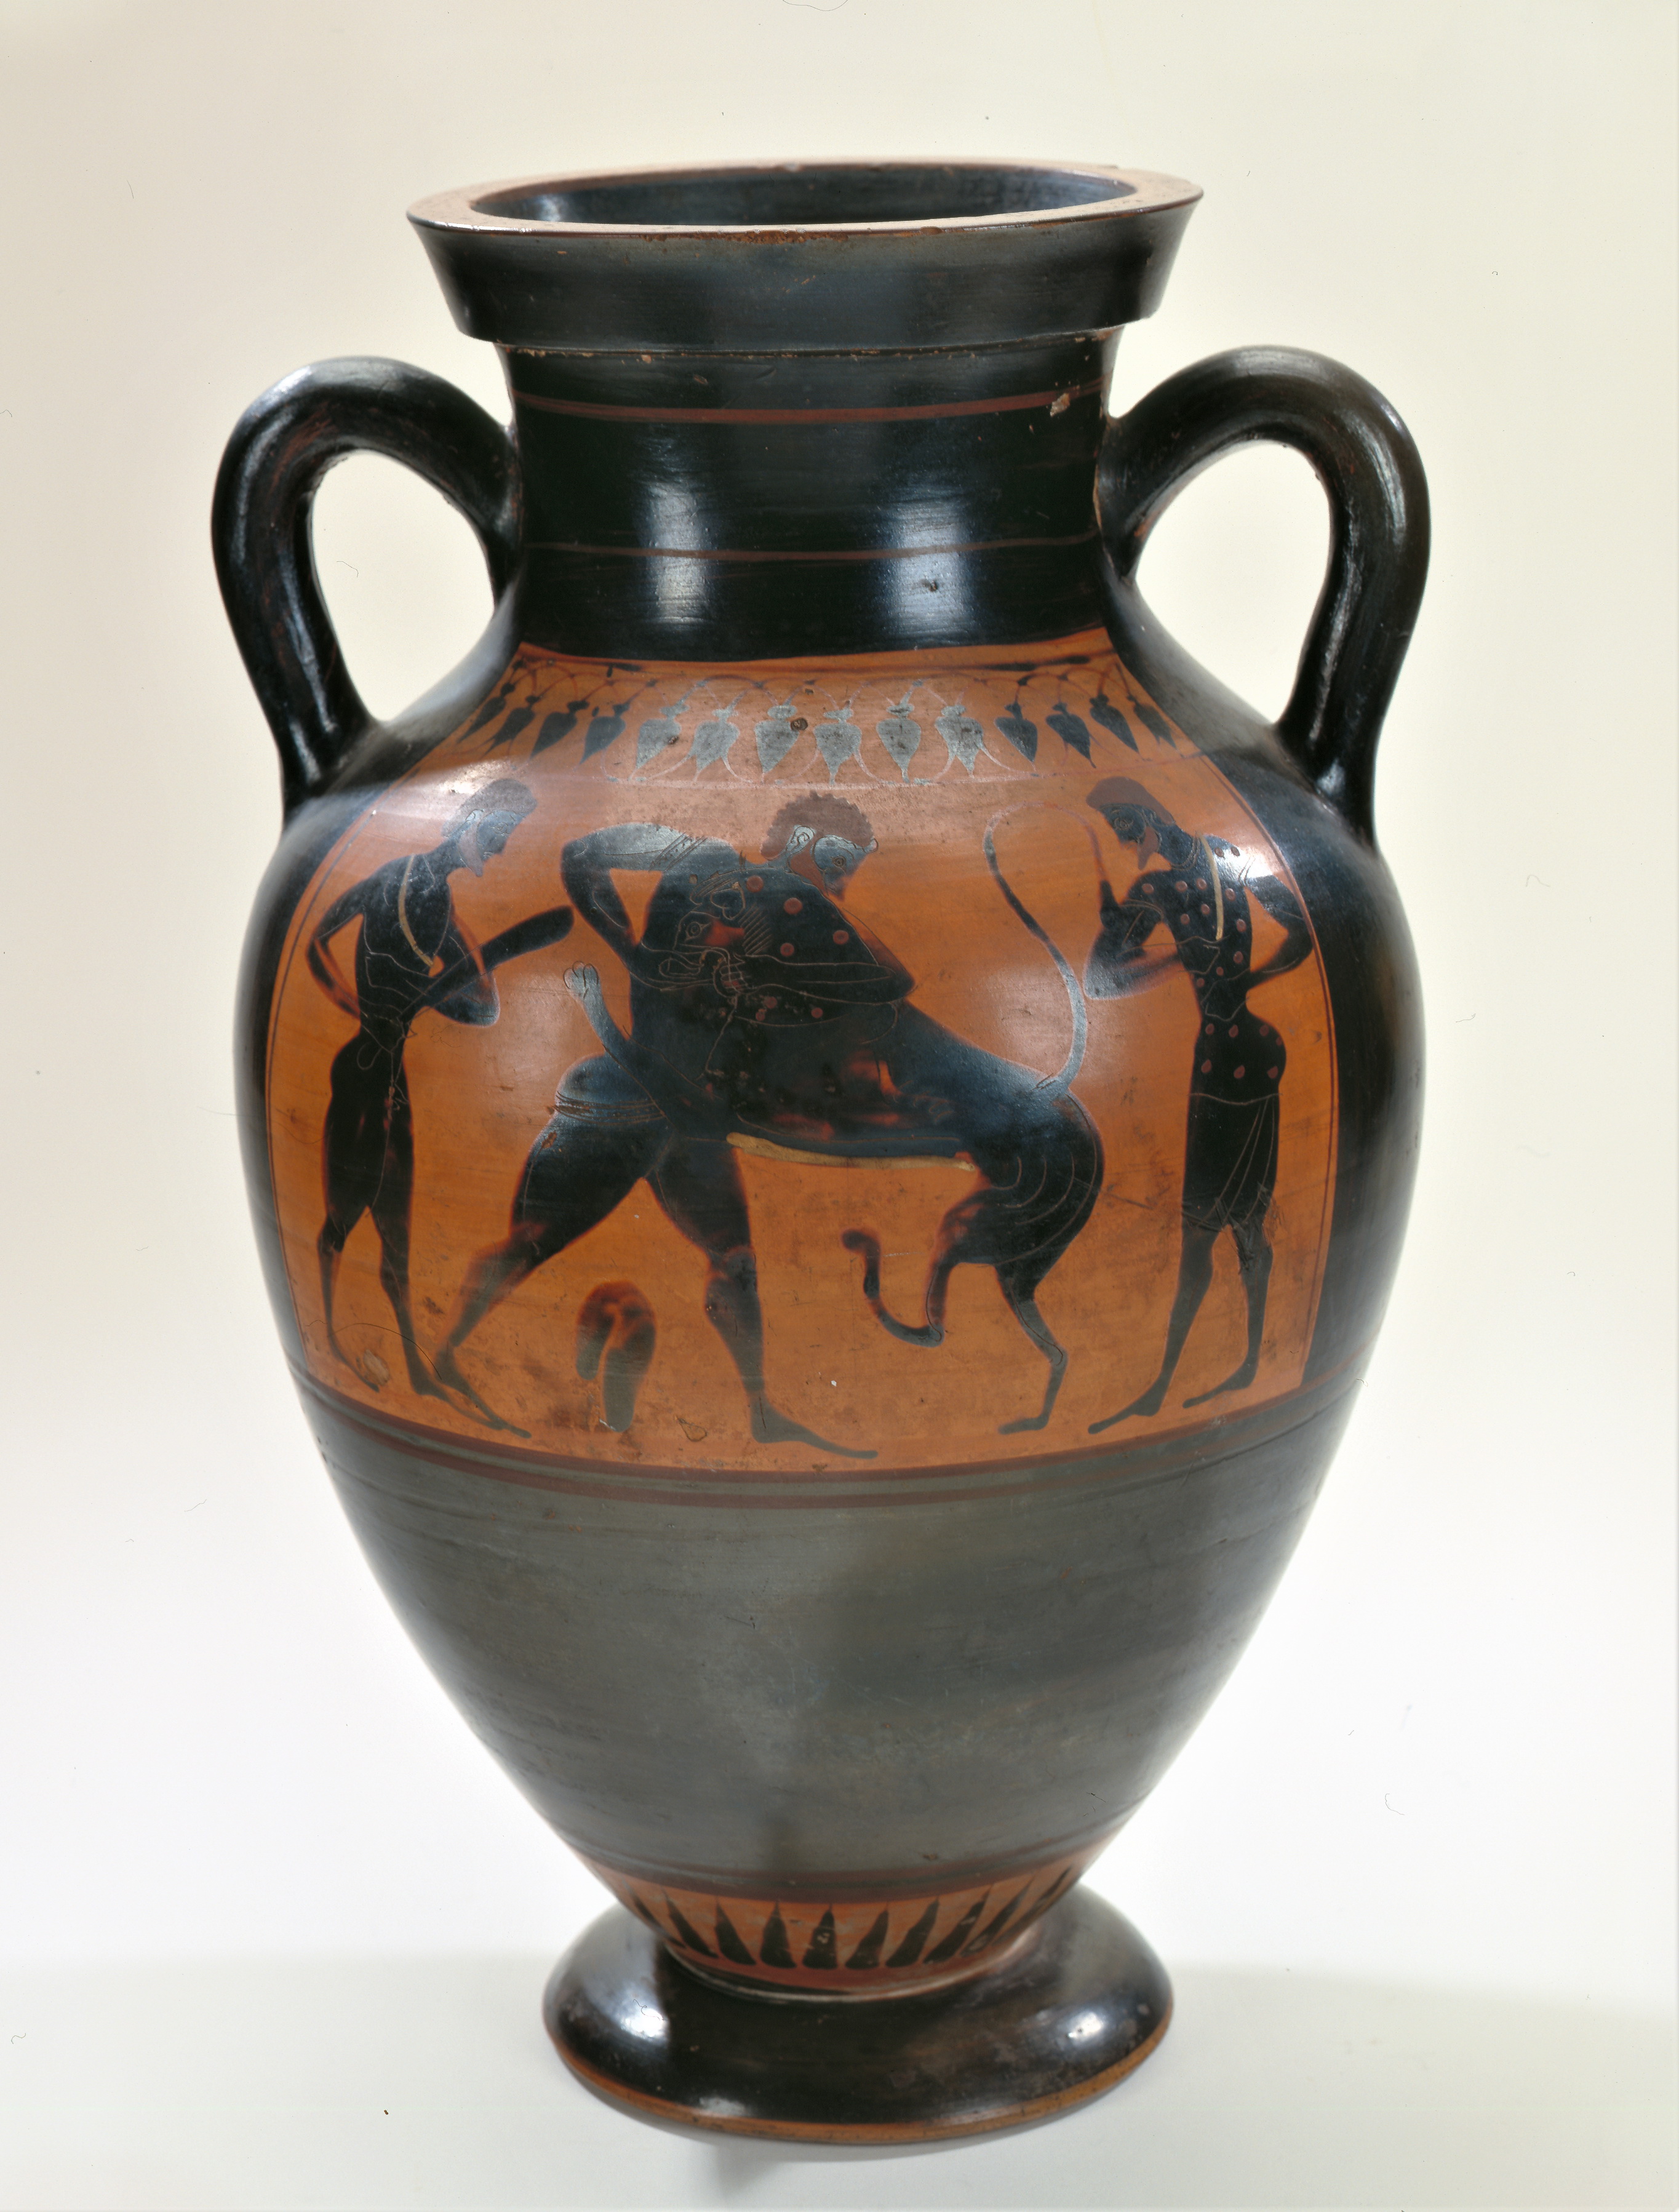 Swing Painter. Black-figured amphora. Greece, Attica, 530-525 BC. From the Khanenkos’ Collection.